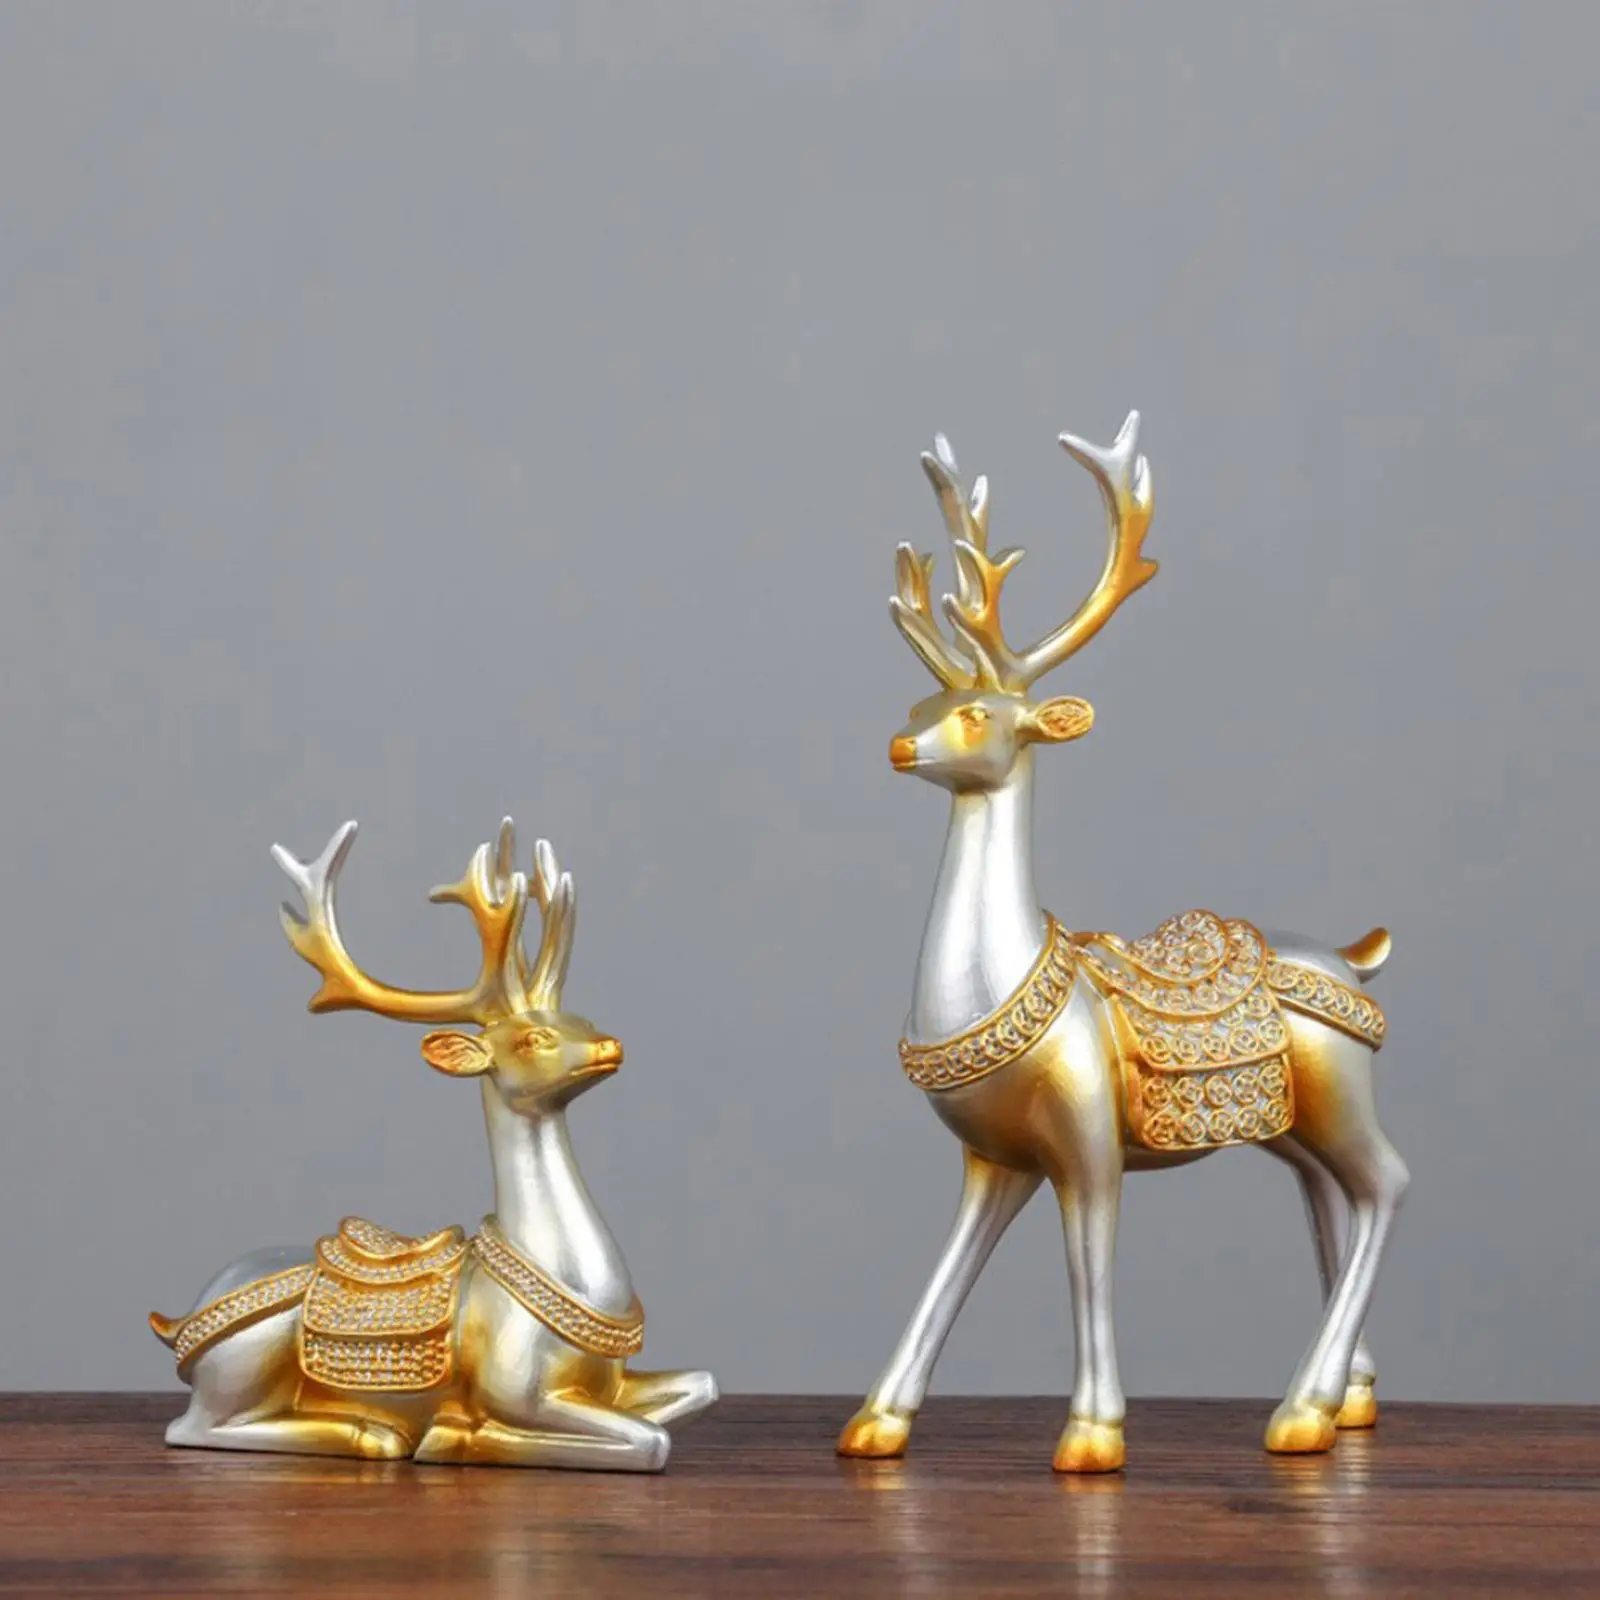 2x Deer Statue Decoration Home Decoration Resin Figurine Bookshelf Tabletop